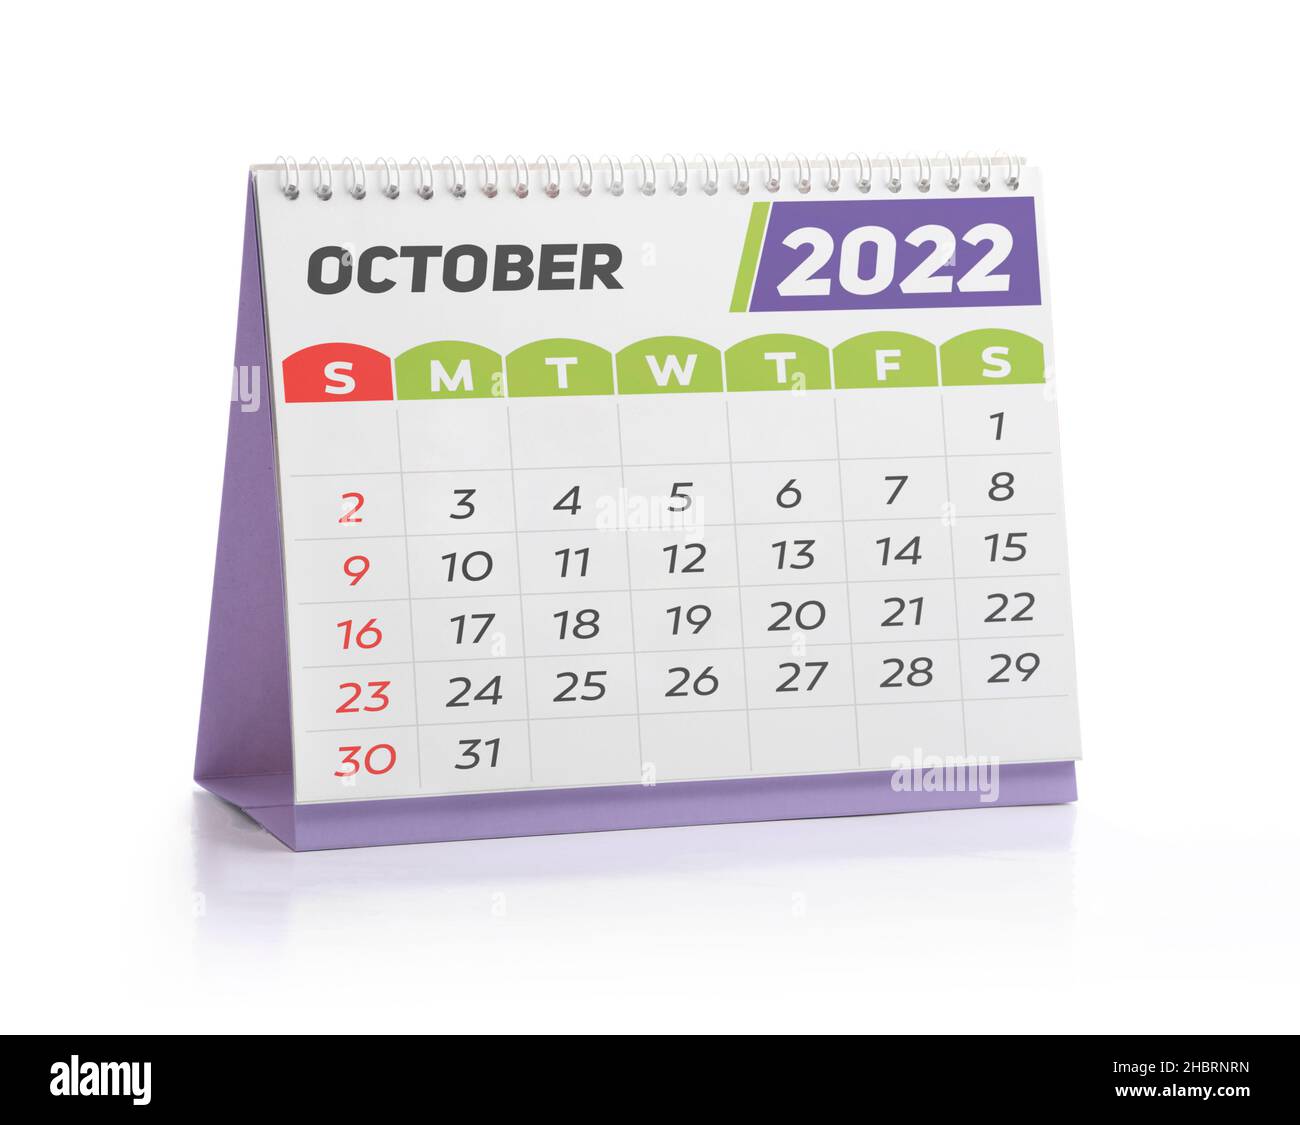 October White Office Calendar 2022 Isolated on White Stock Photo